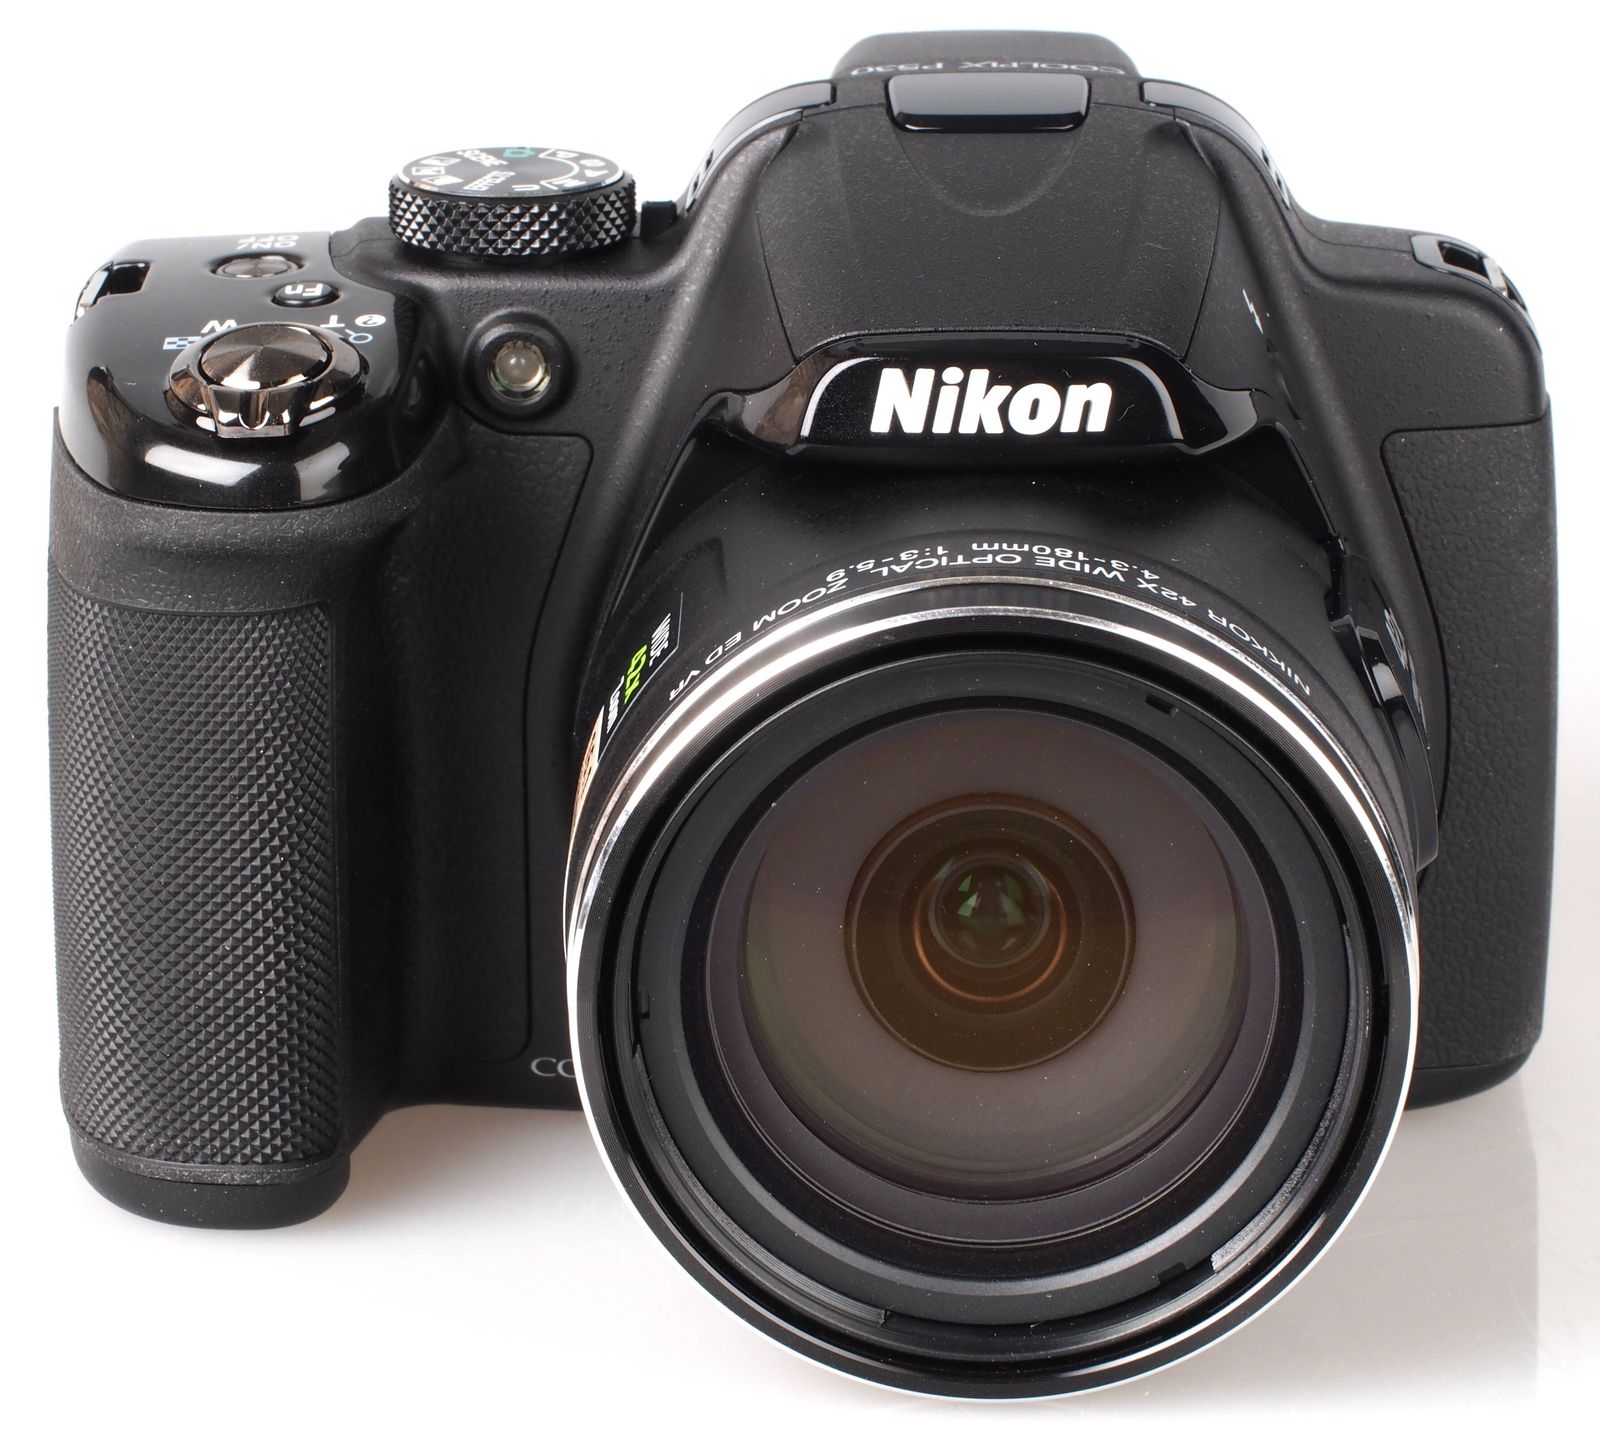 Nikon Coolpix P530 Bridge Camera Review